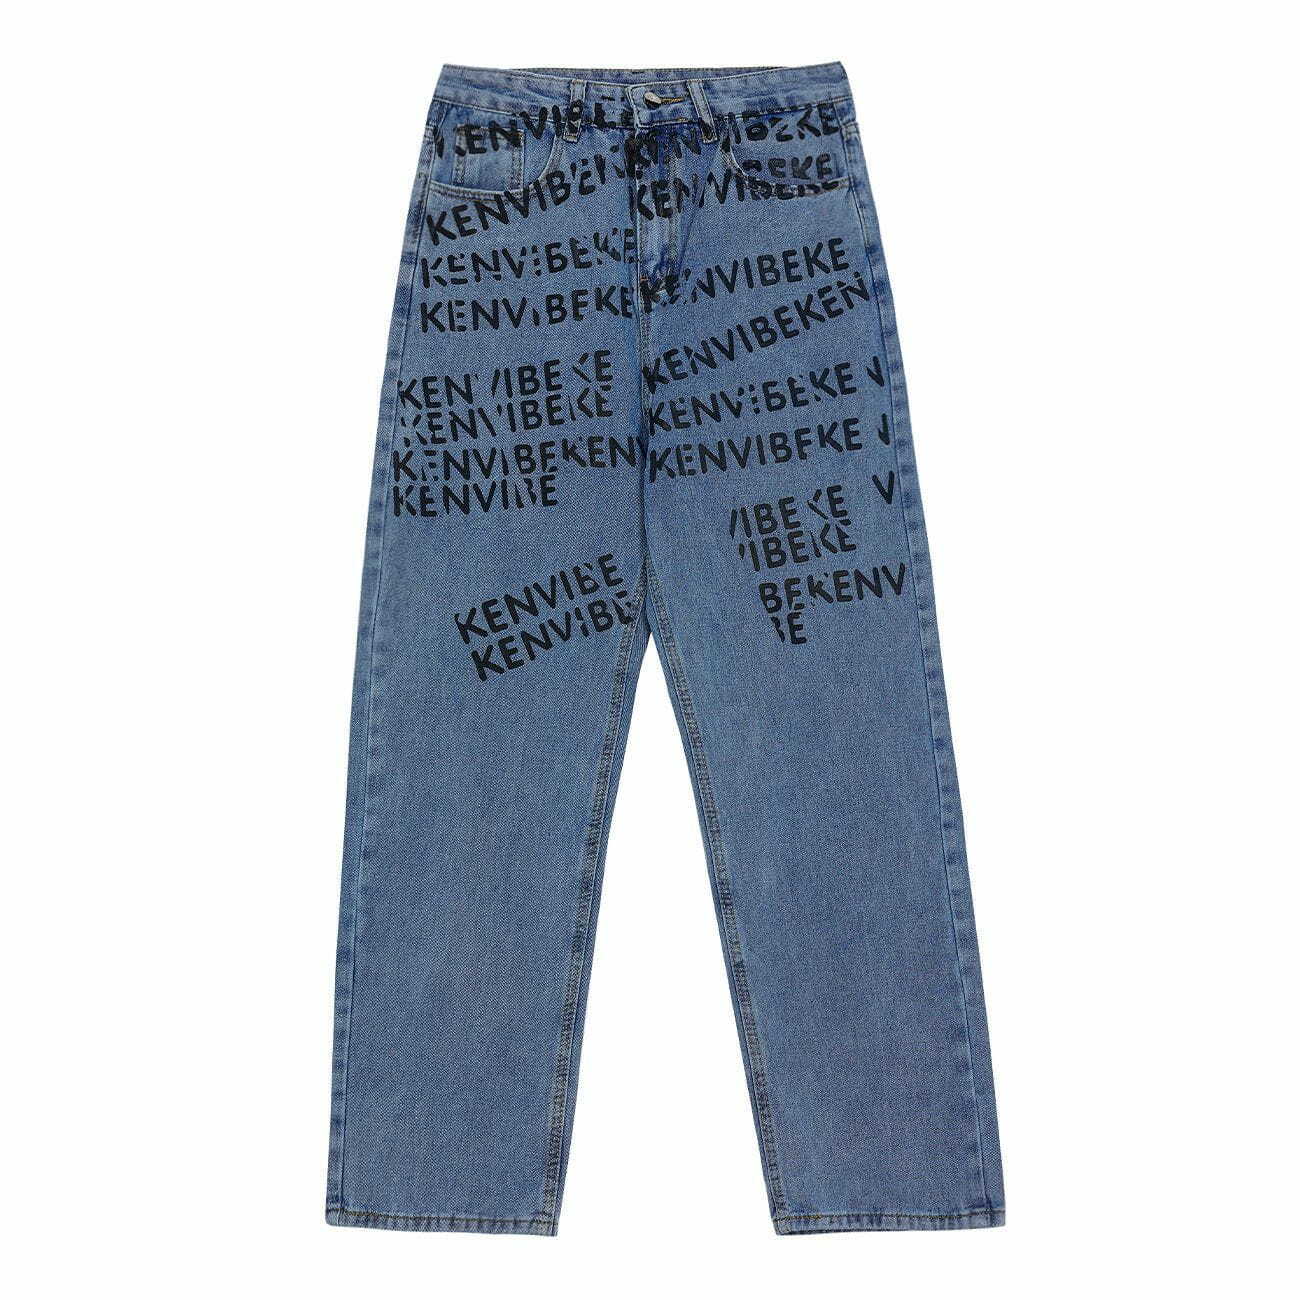 custom letter print jeans edgy & youthful denim 7327